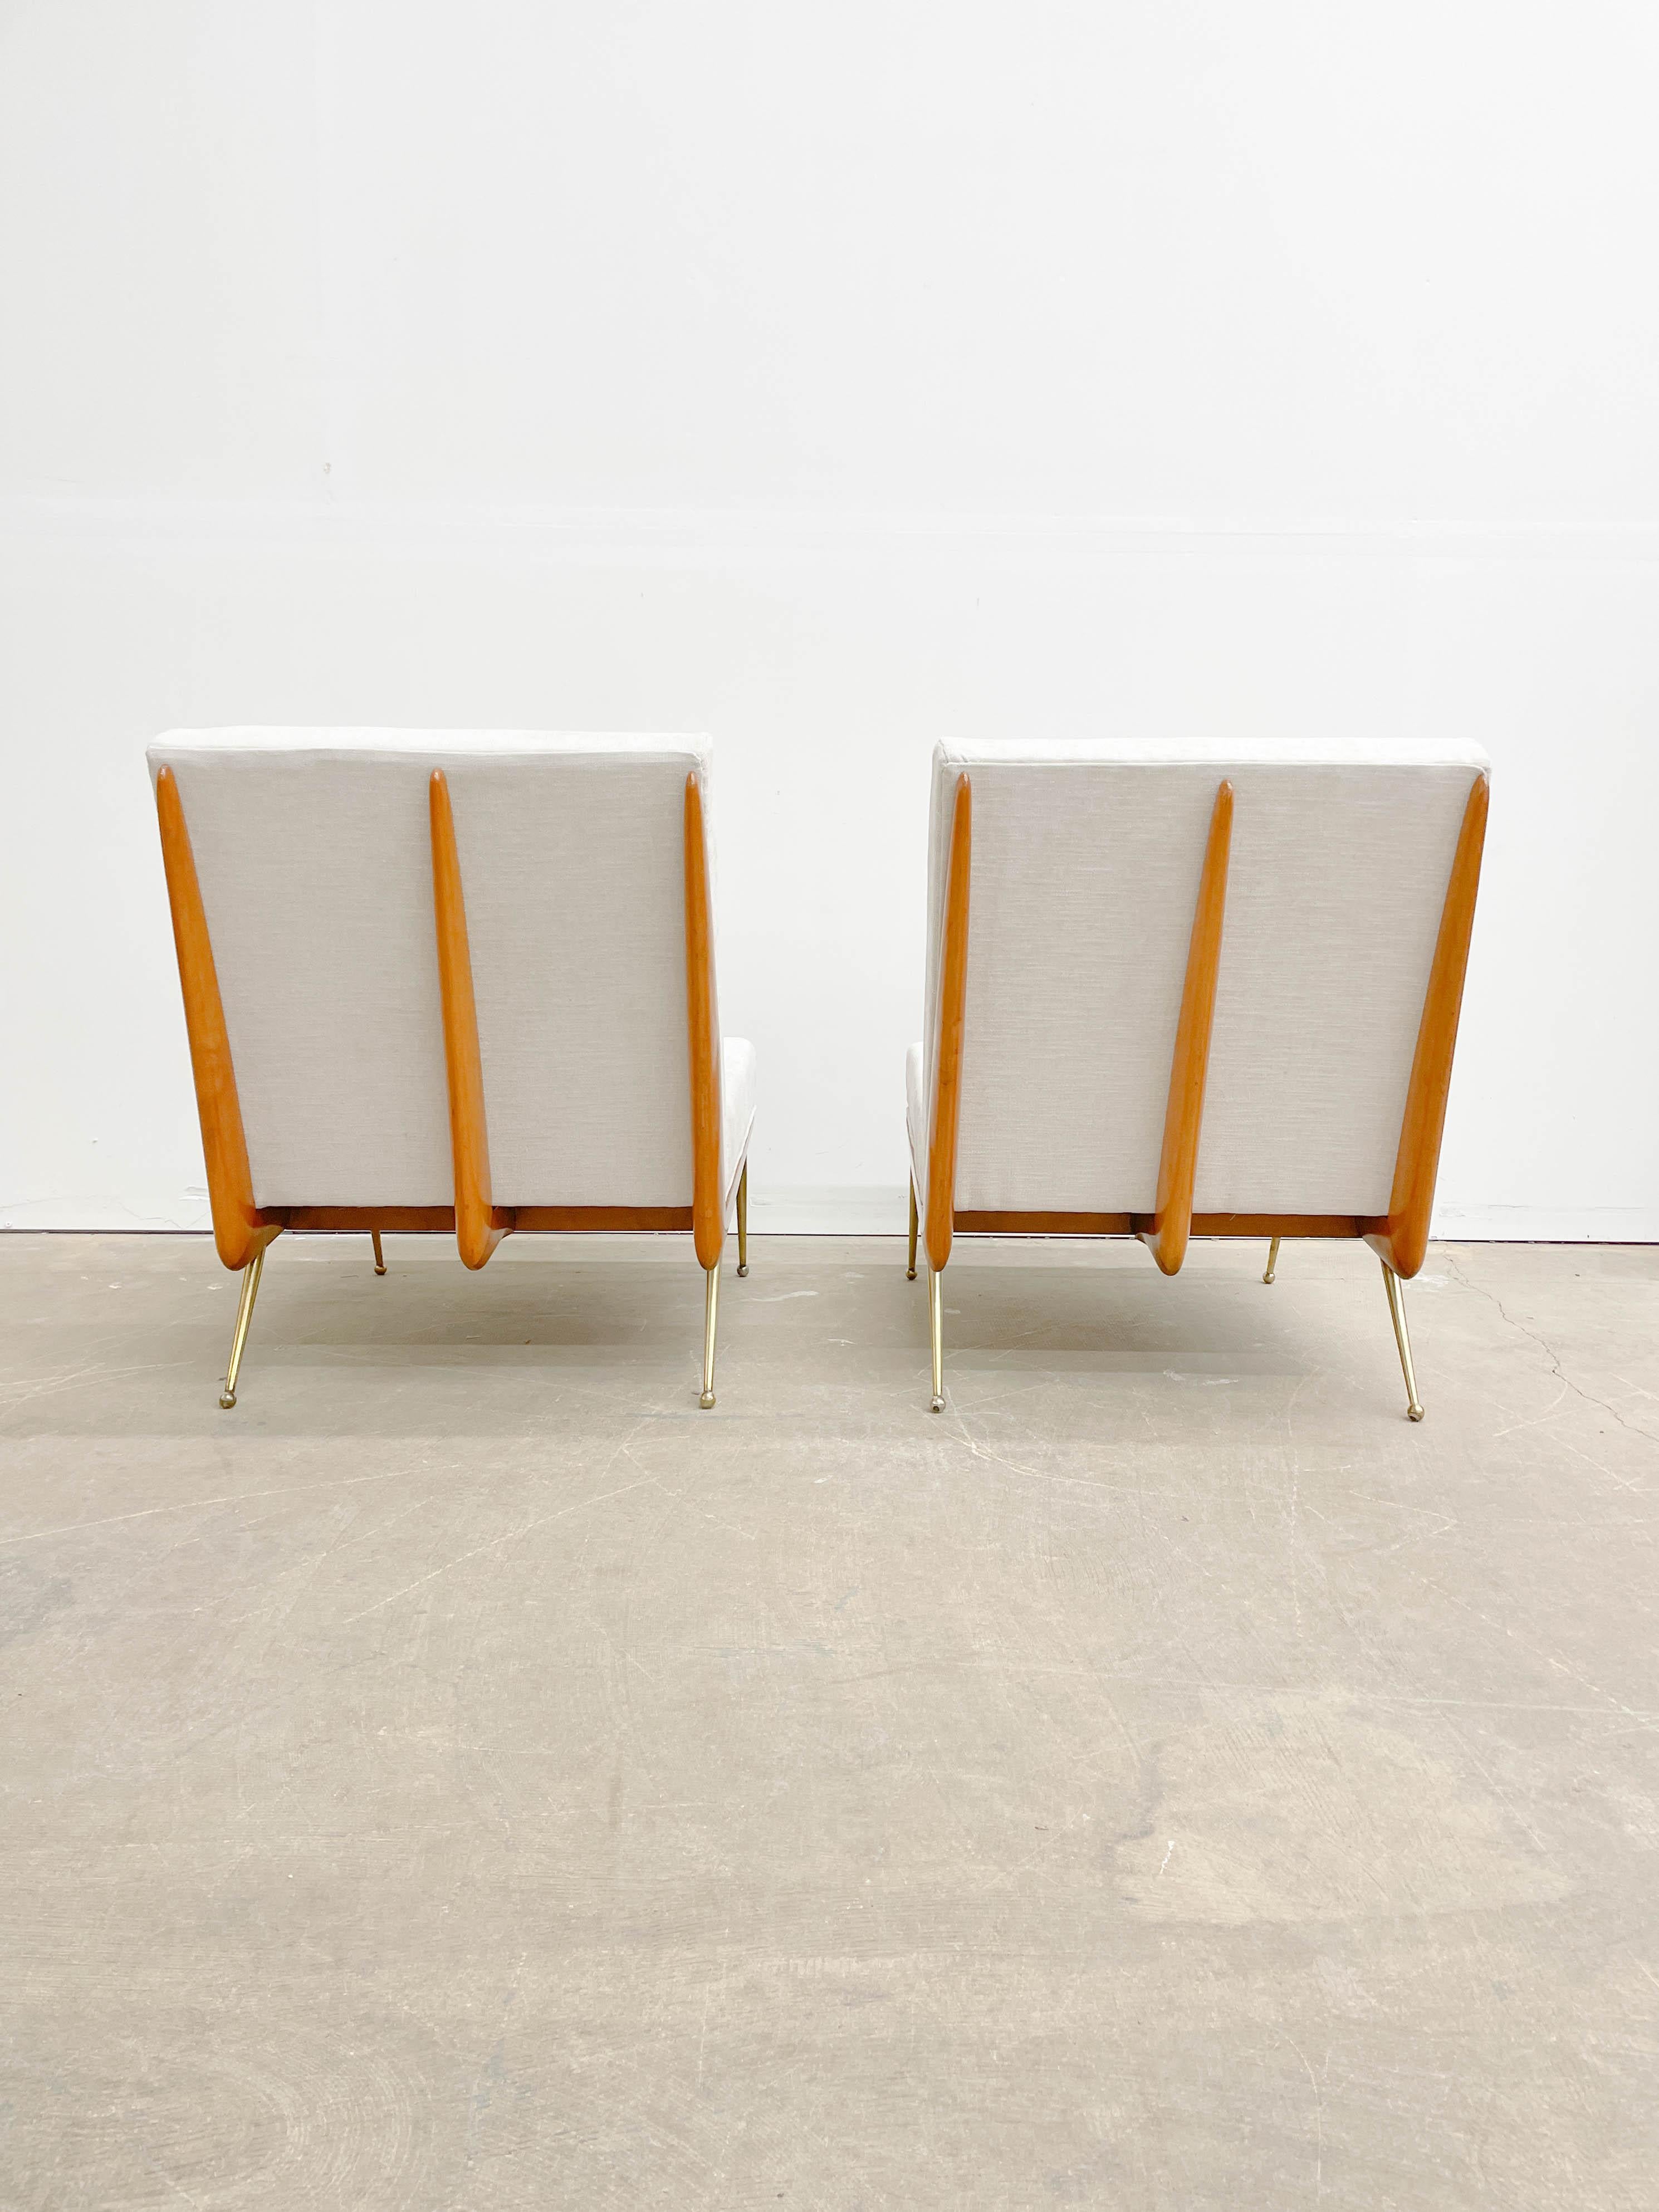 20th Century Rare Mid Century Modern Boomerang Chairs by Artcraft / Robinson-Johnson